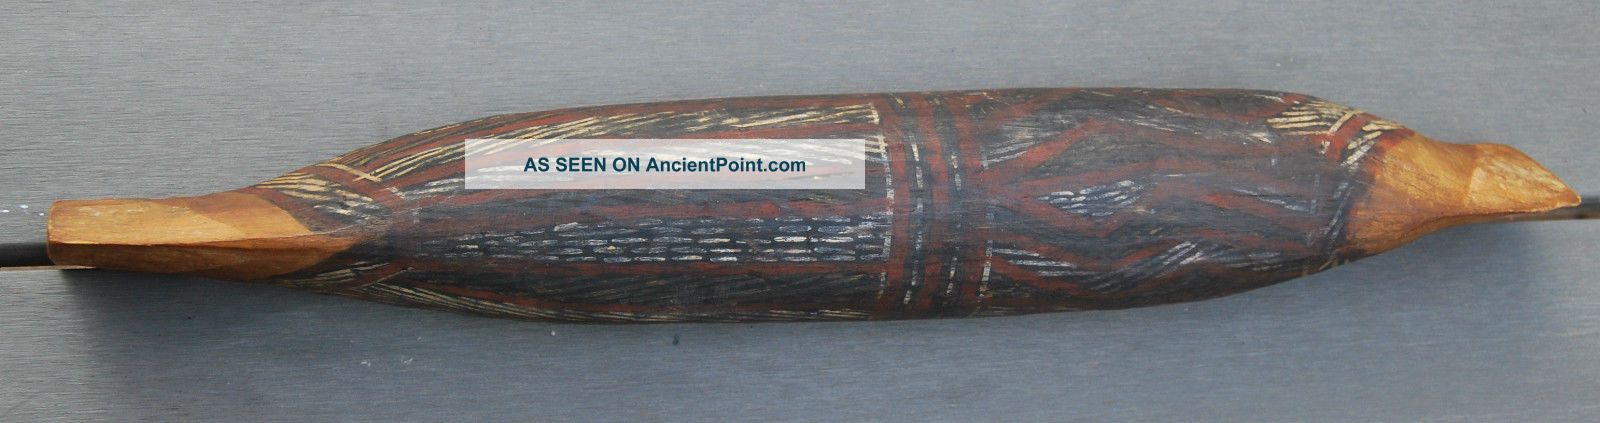 Old Aboriginal Painted Canoe - Groote Eylandt Pacific Islands & Oceania photo